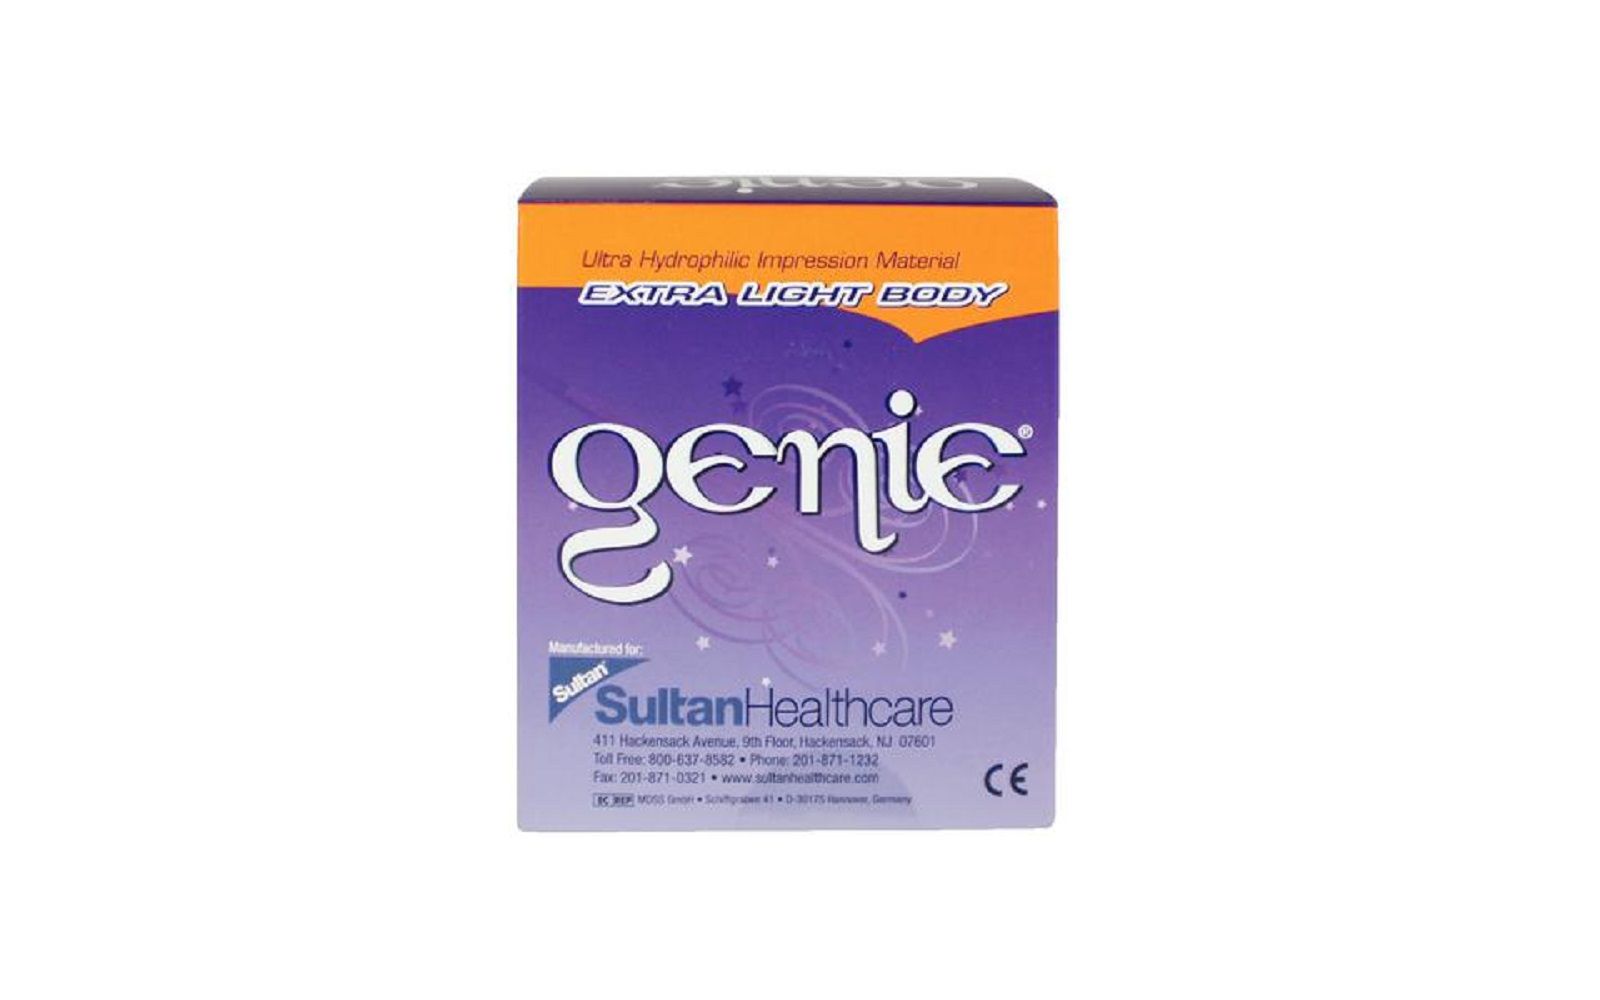 Genie™ vps impression material, standard kit - sultan healthcare inc